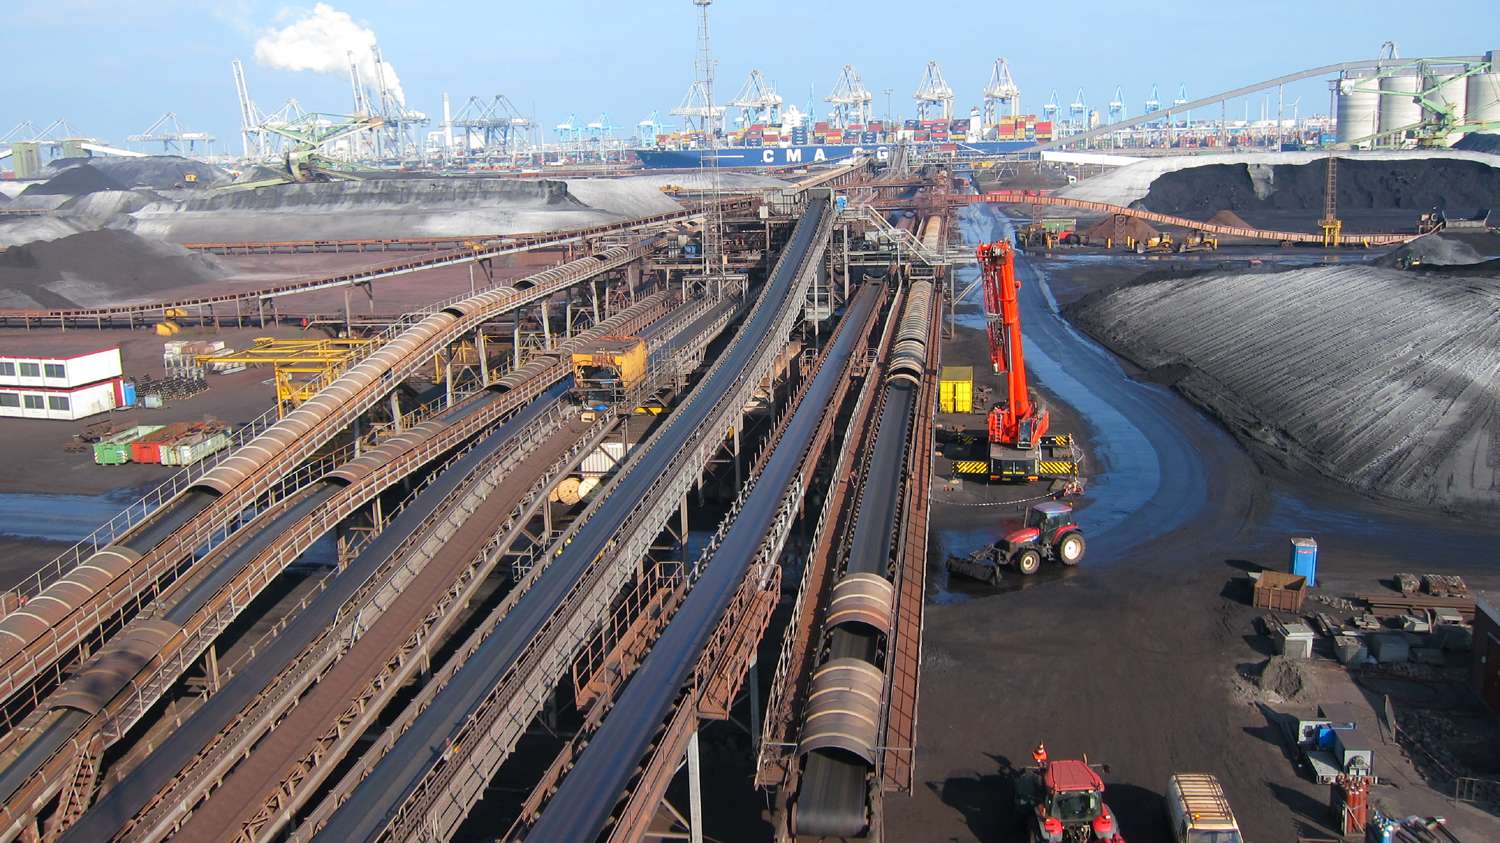 Coal handling conveyors